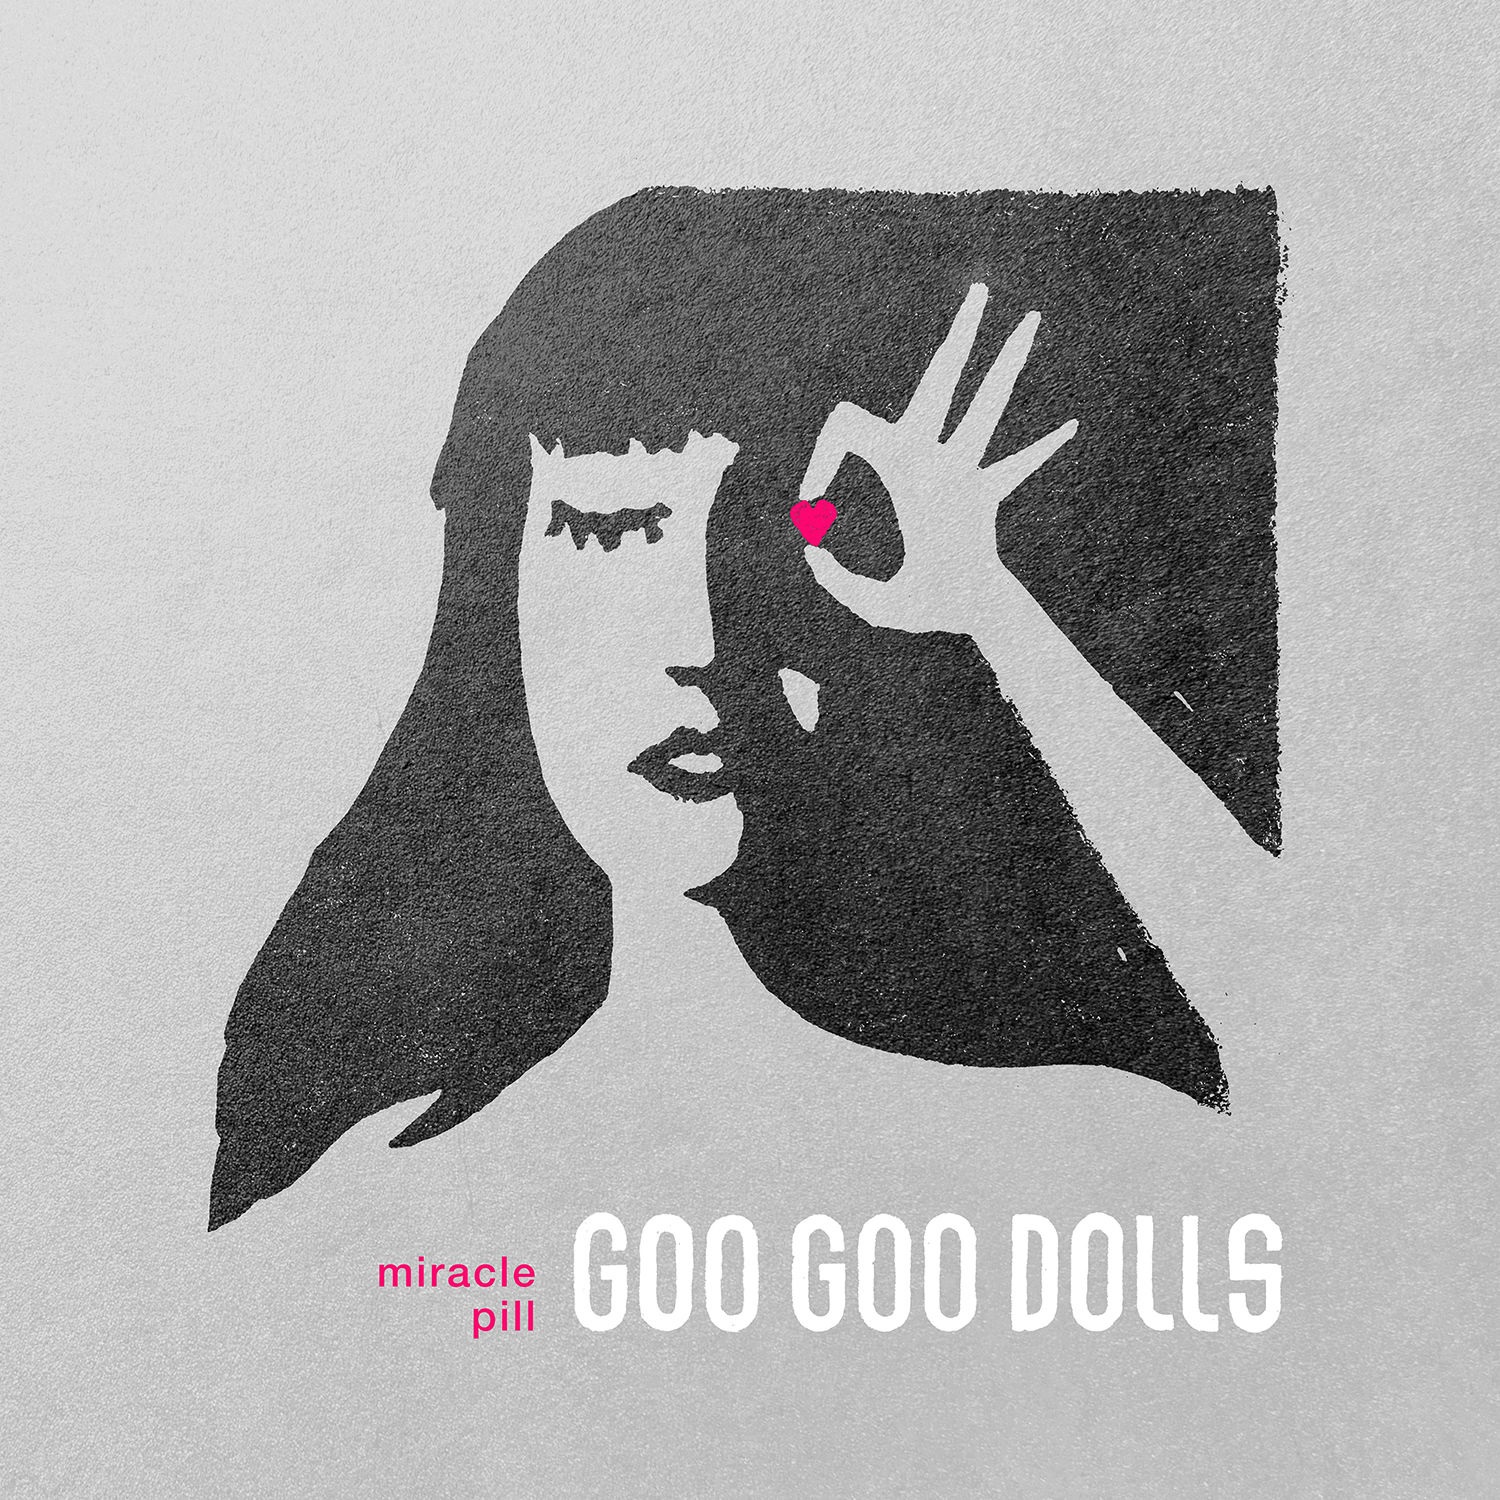 The Goo Goo Dolls - Miracle Pill (Deluxe Edition) (2019/2020) [FLAC 24bit/96kHz]